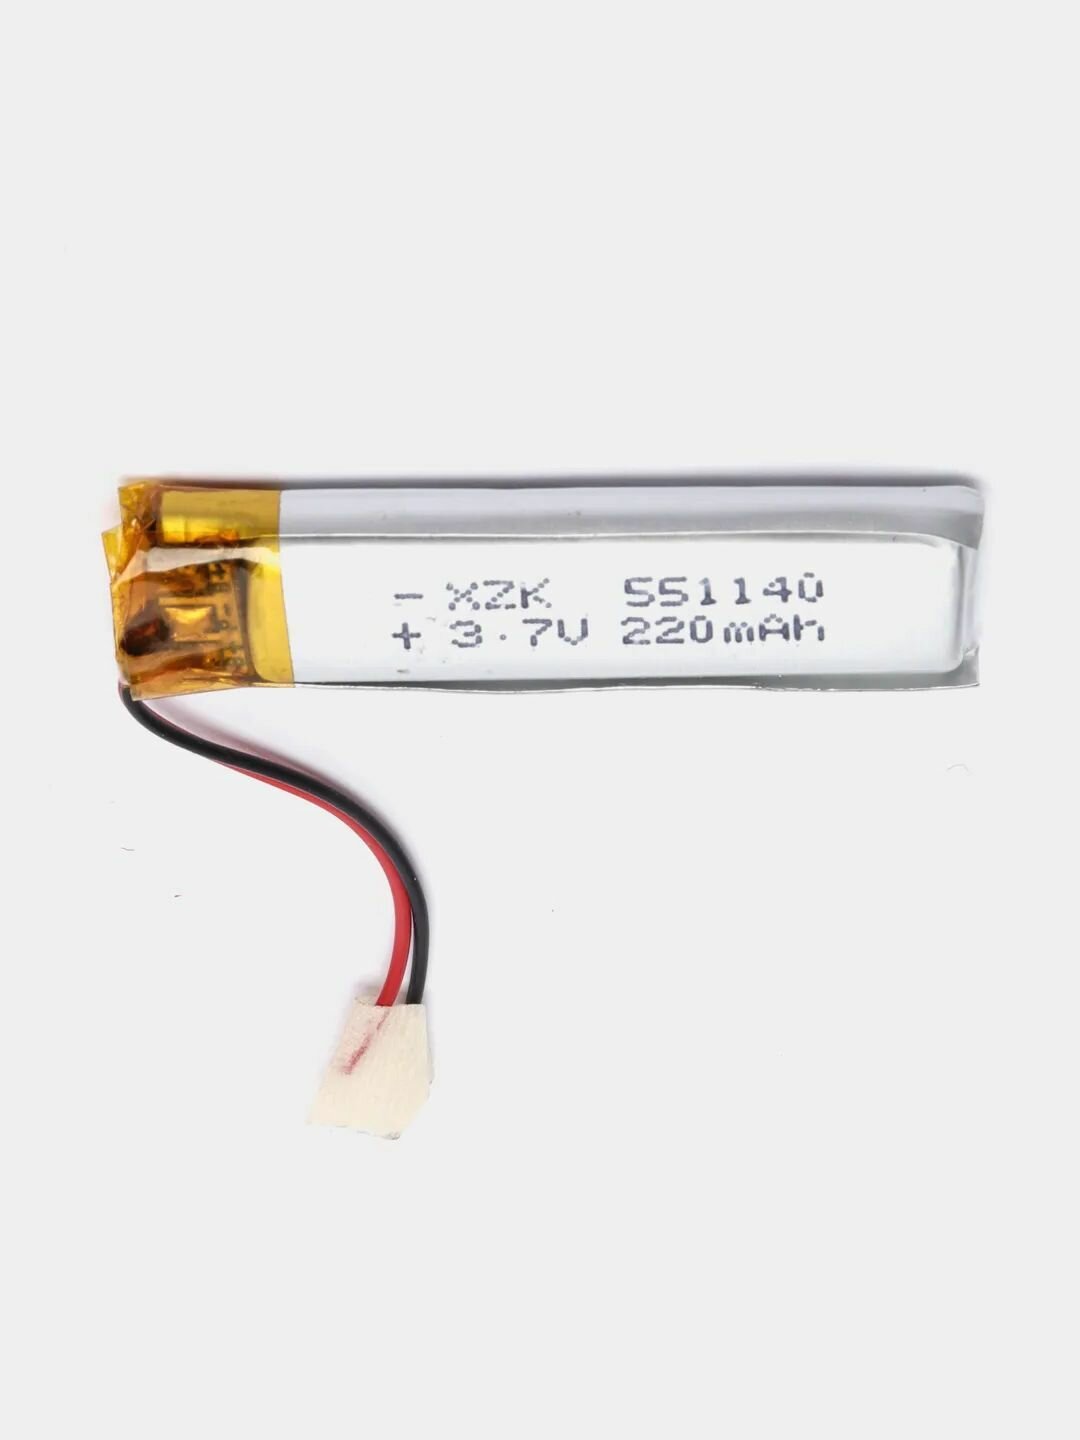 Аккумулятор Li-Pol 2pin 3.7V/220mAh 551140 (батарея) 55х11х40 мм (Ф)